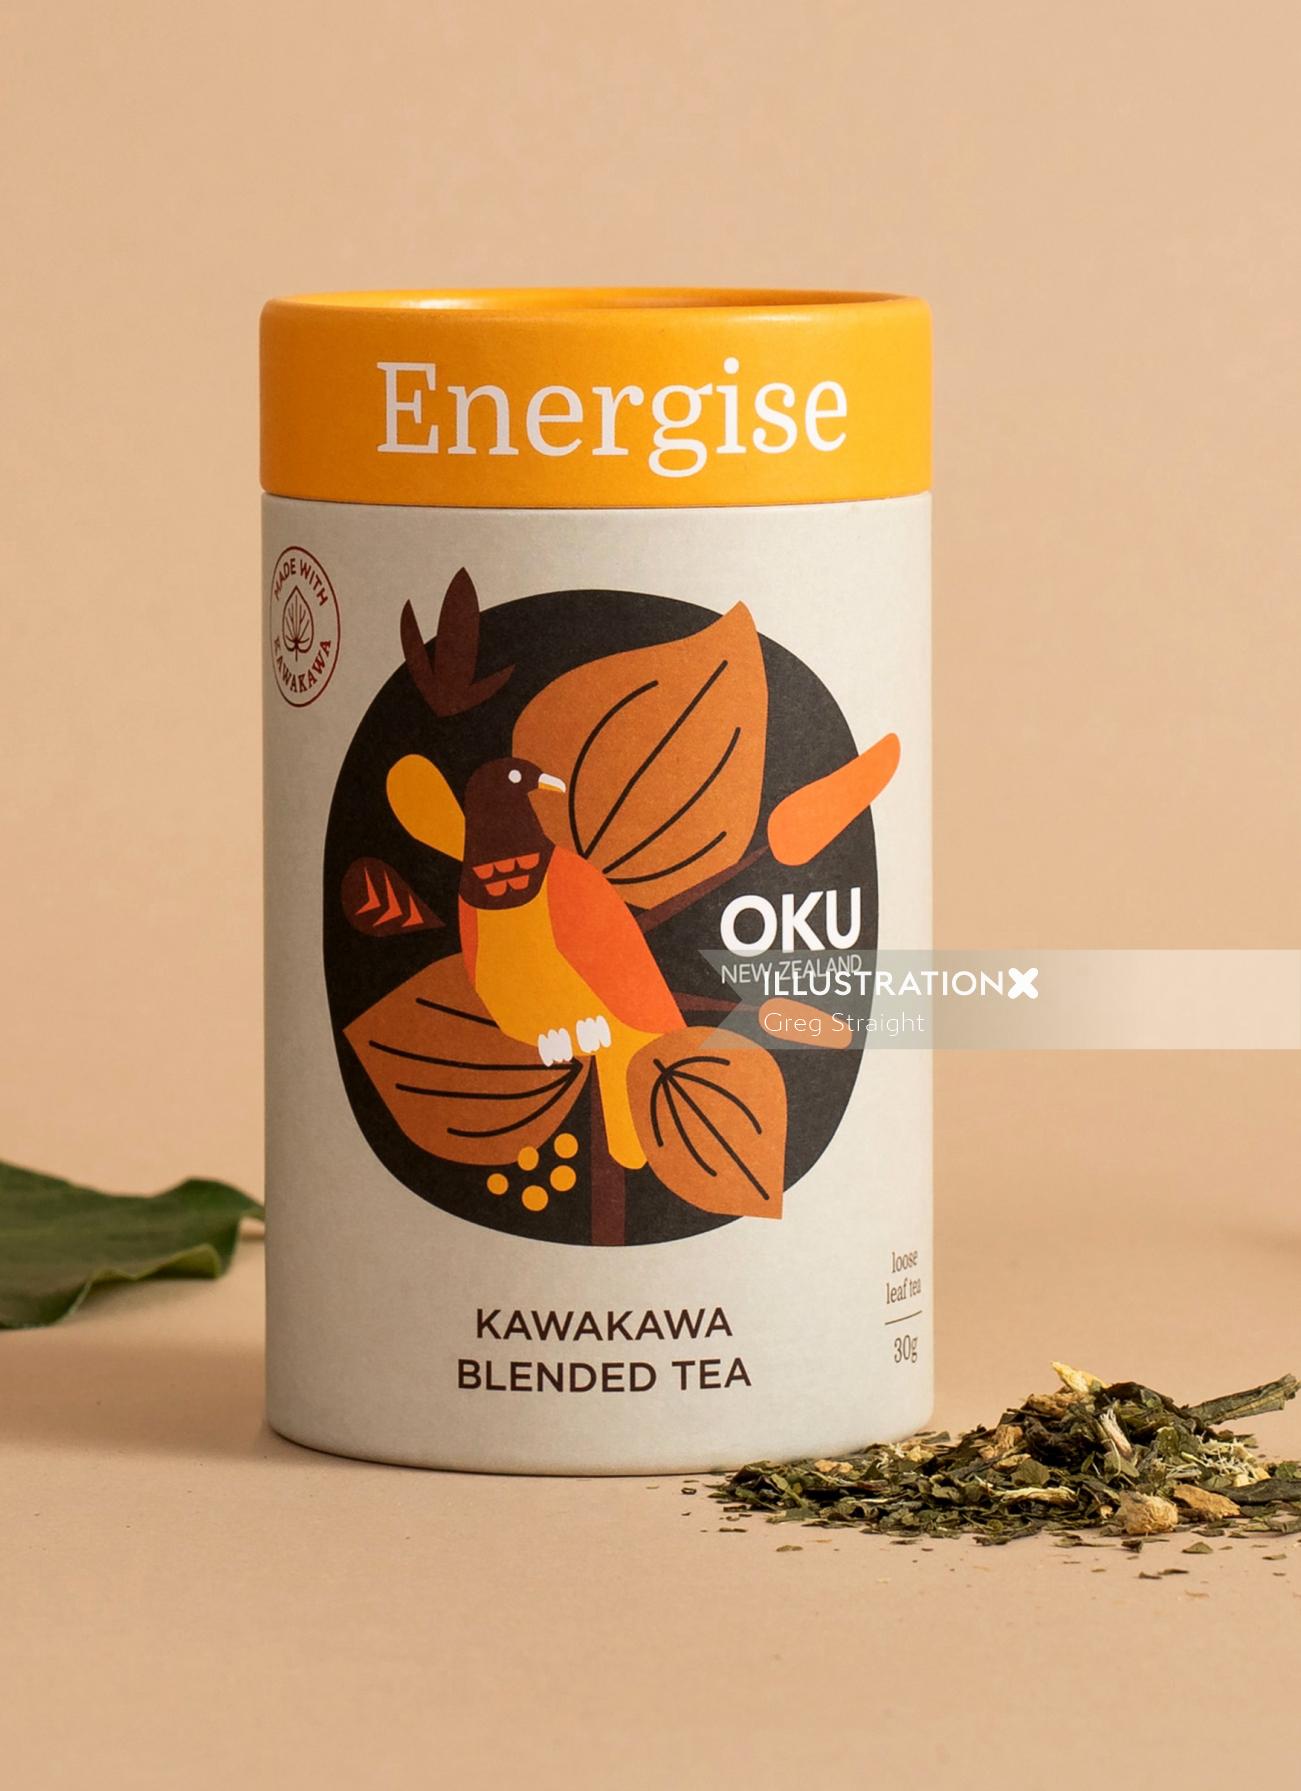 Kawakawa Blended Tea packaging illustration